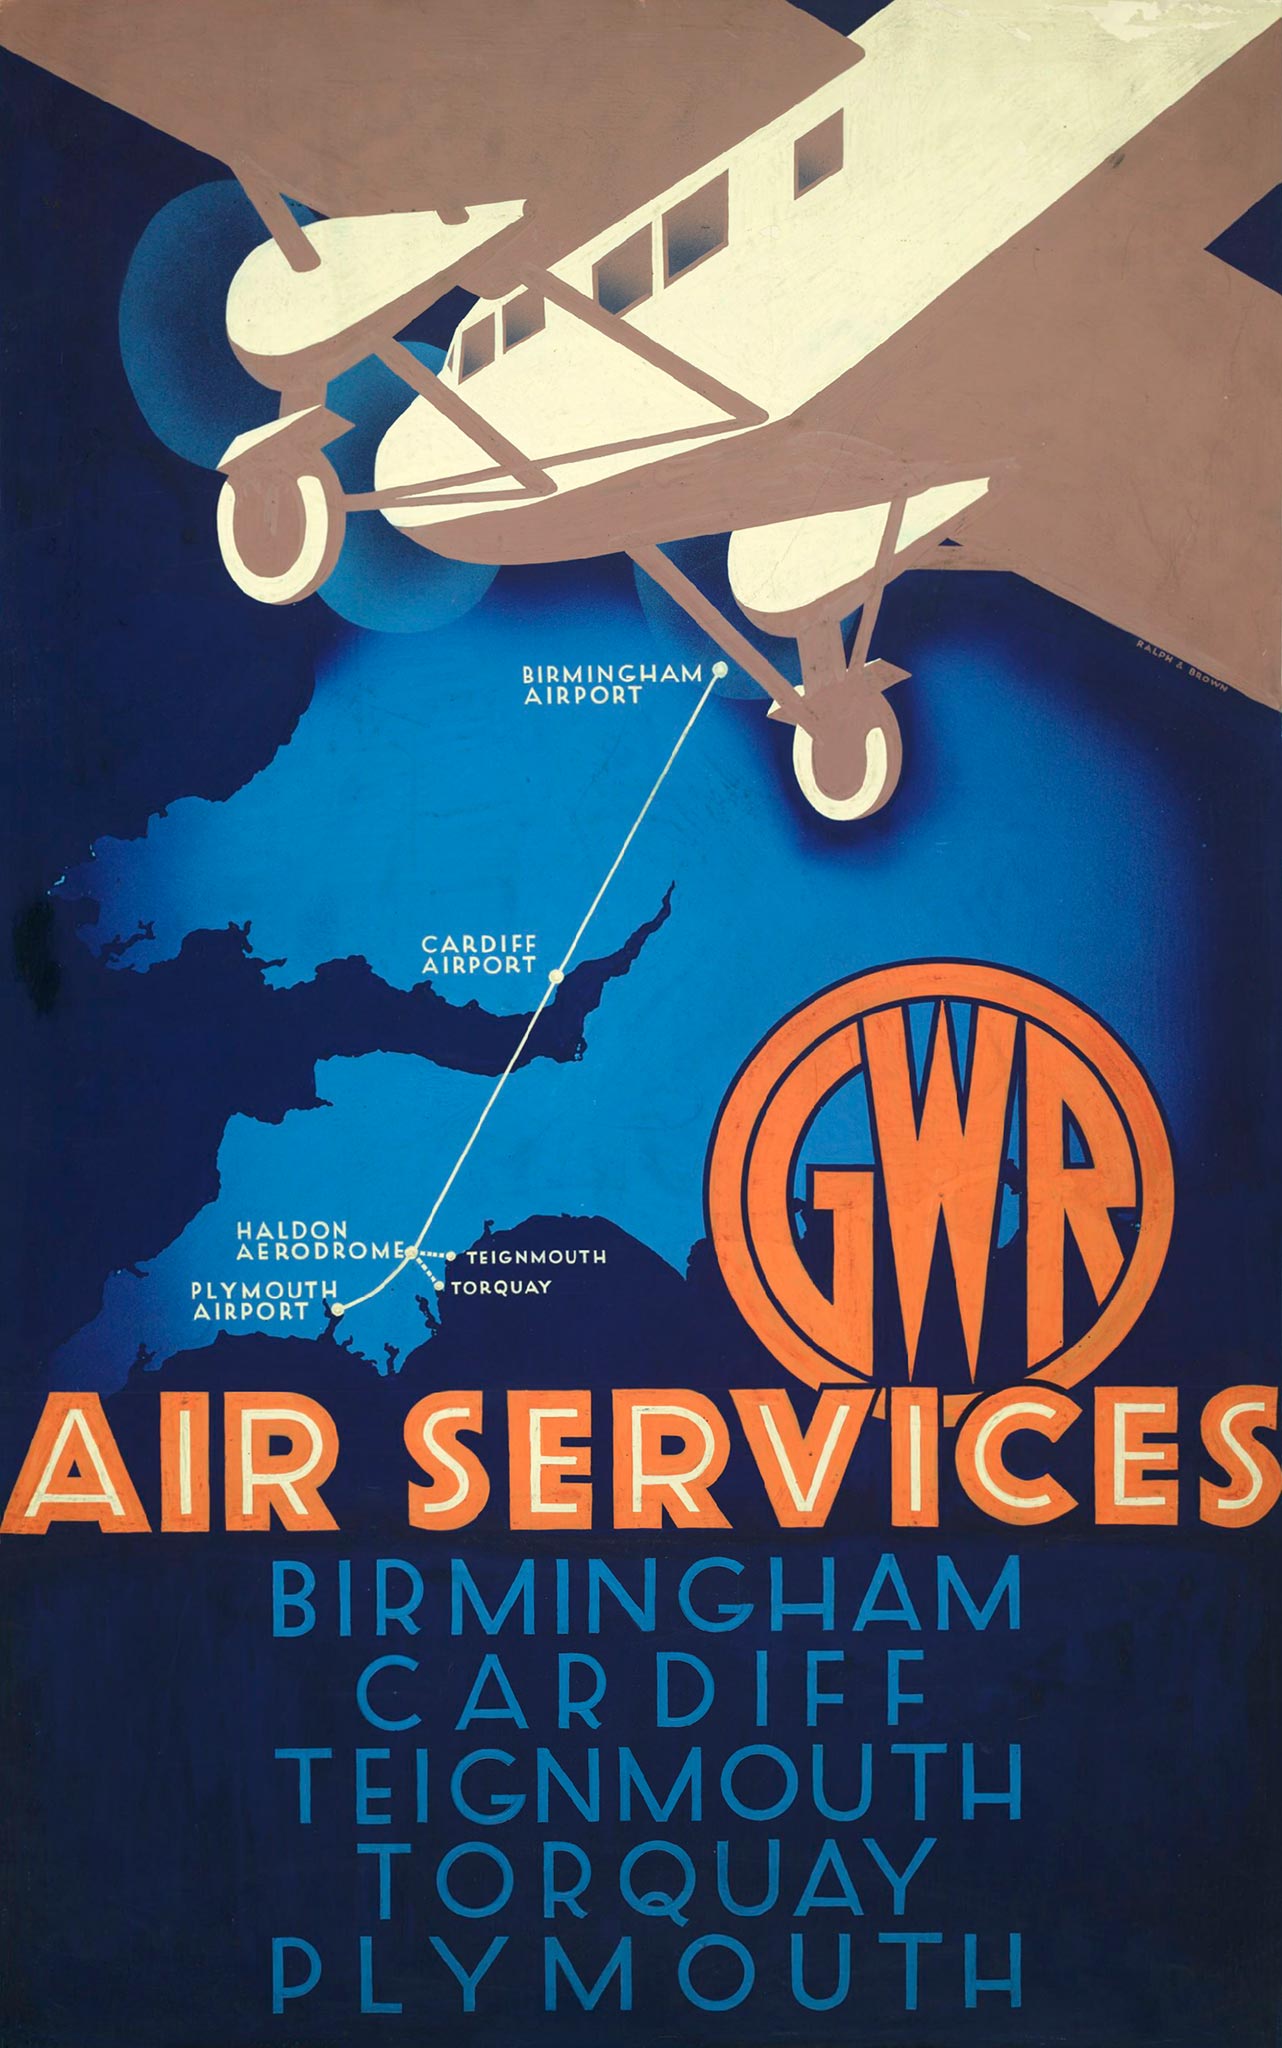 Germany German by Airplane Europe European Vintage Travel Advertisement Poster